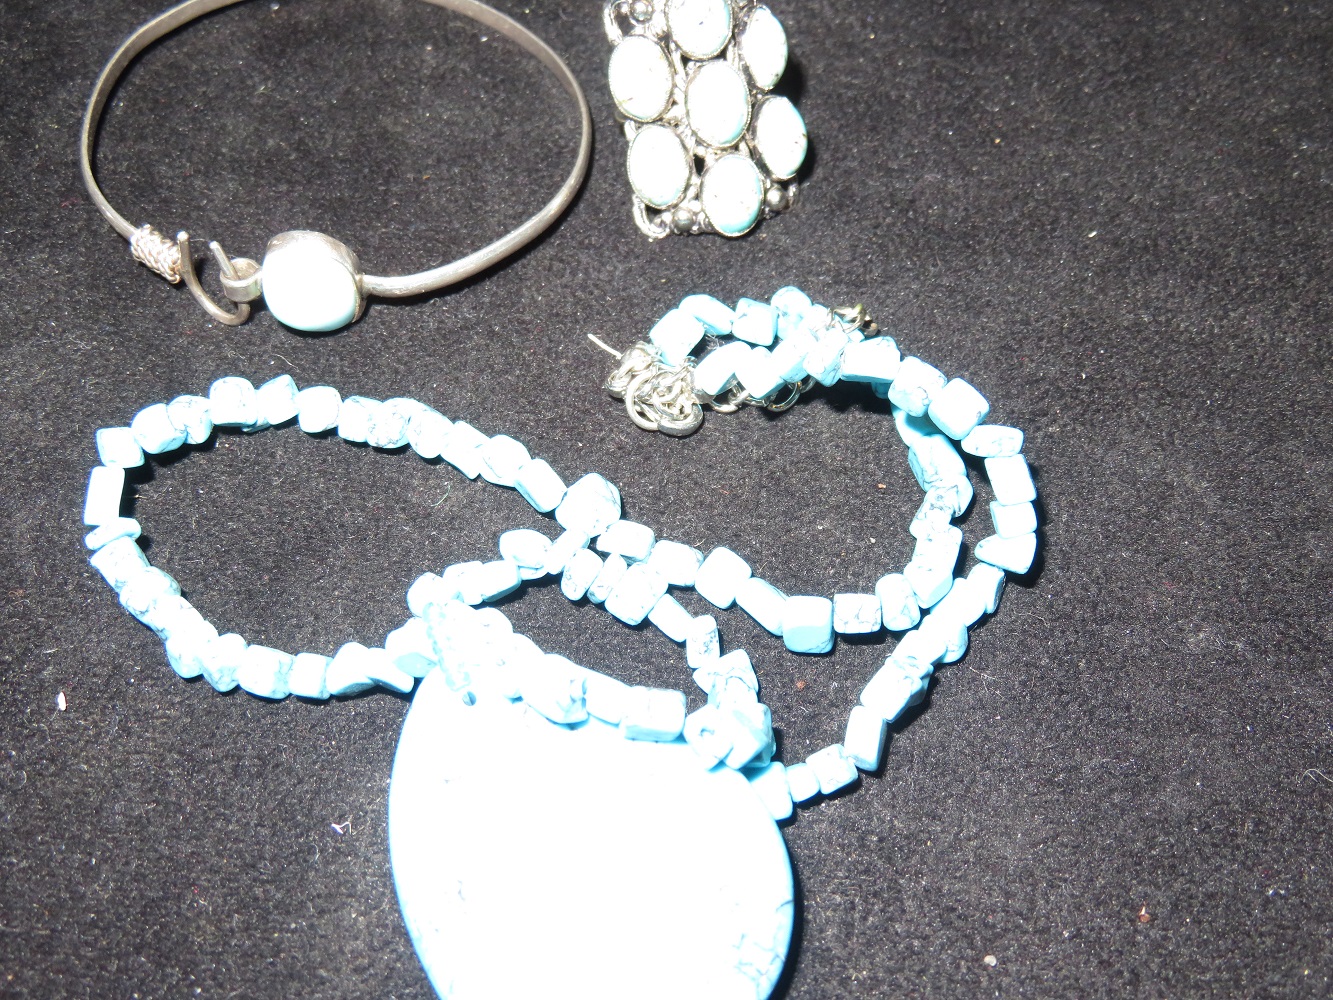 3 Pieces of Navajo blue jewellery